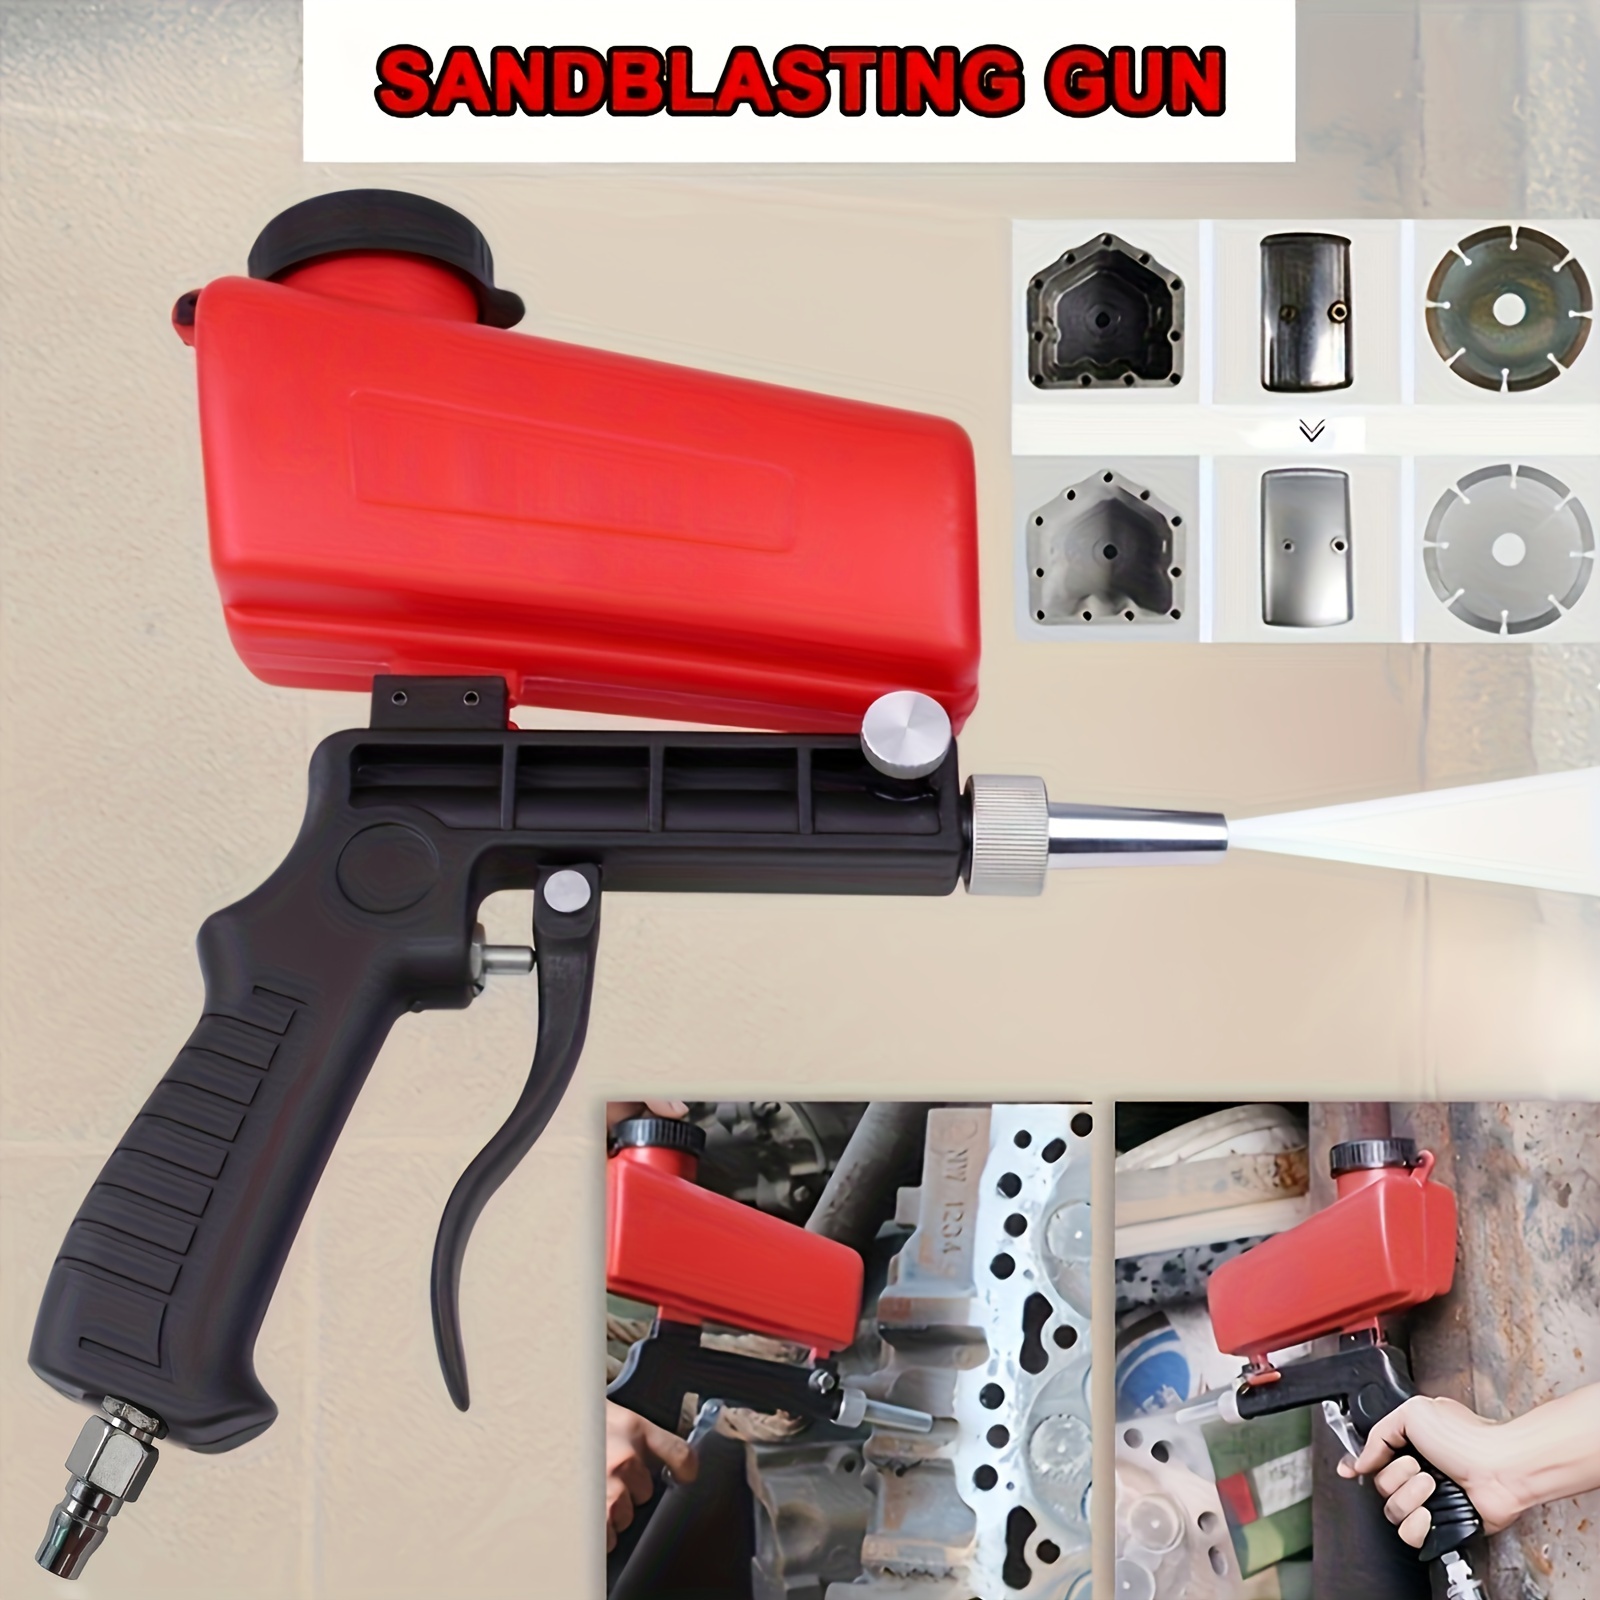 

90psi Portable Gravity Sandblasting Gun Aluminium Pneumatic Spray Gun Sand Removal Blasting Power Machine